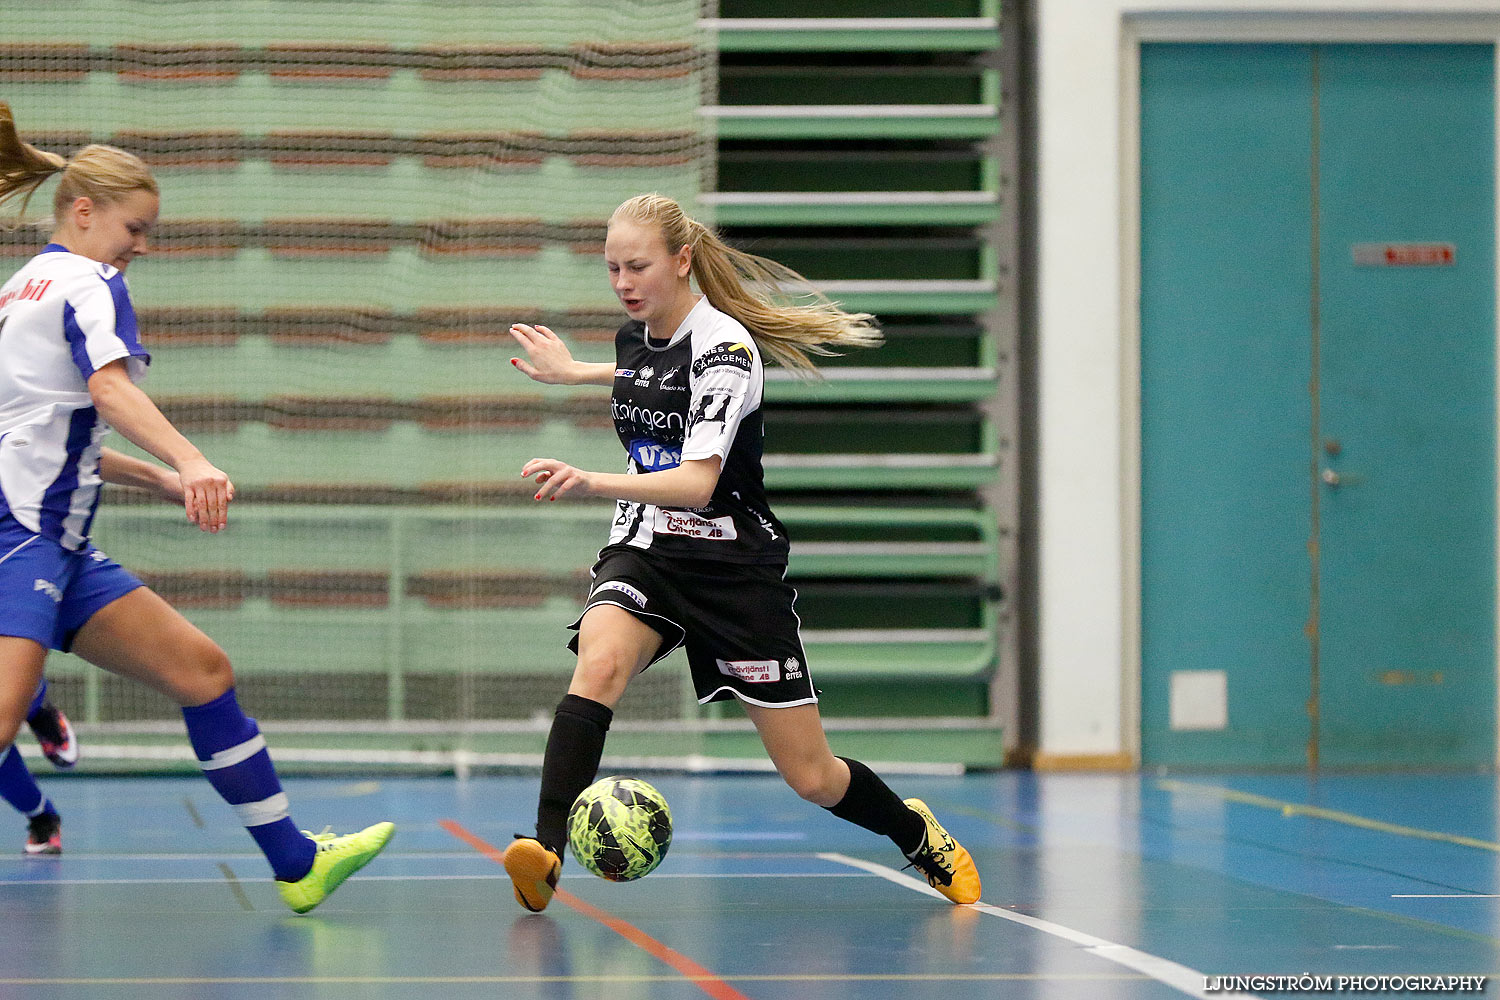 Skövde Futsalcup Damer Skövde KIK-Habo IF,dam,Arena Skövde,Skövde,Sverige,Skövde Futsalcup 2015,Futsal,2015,124500